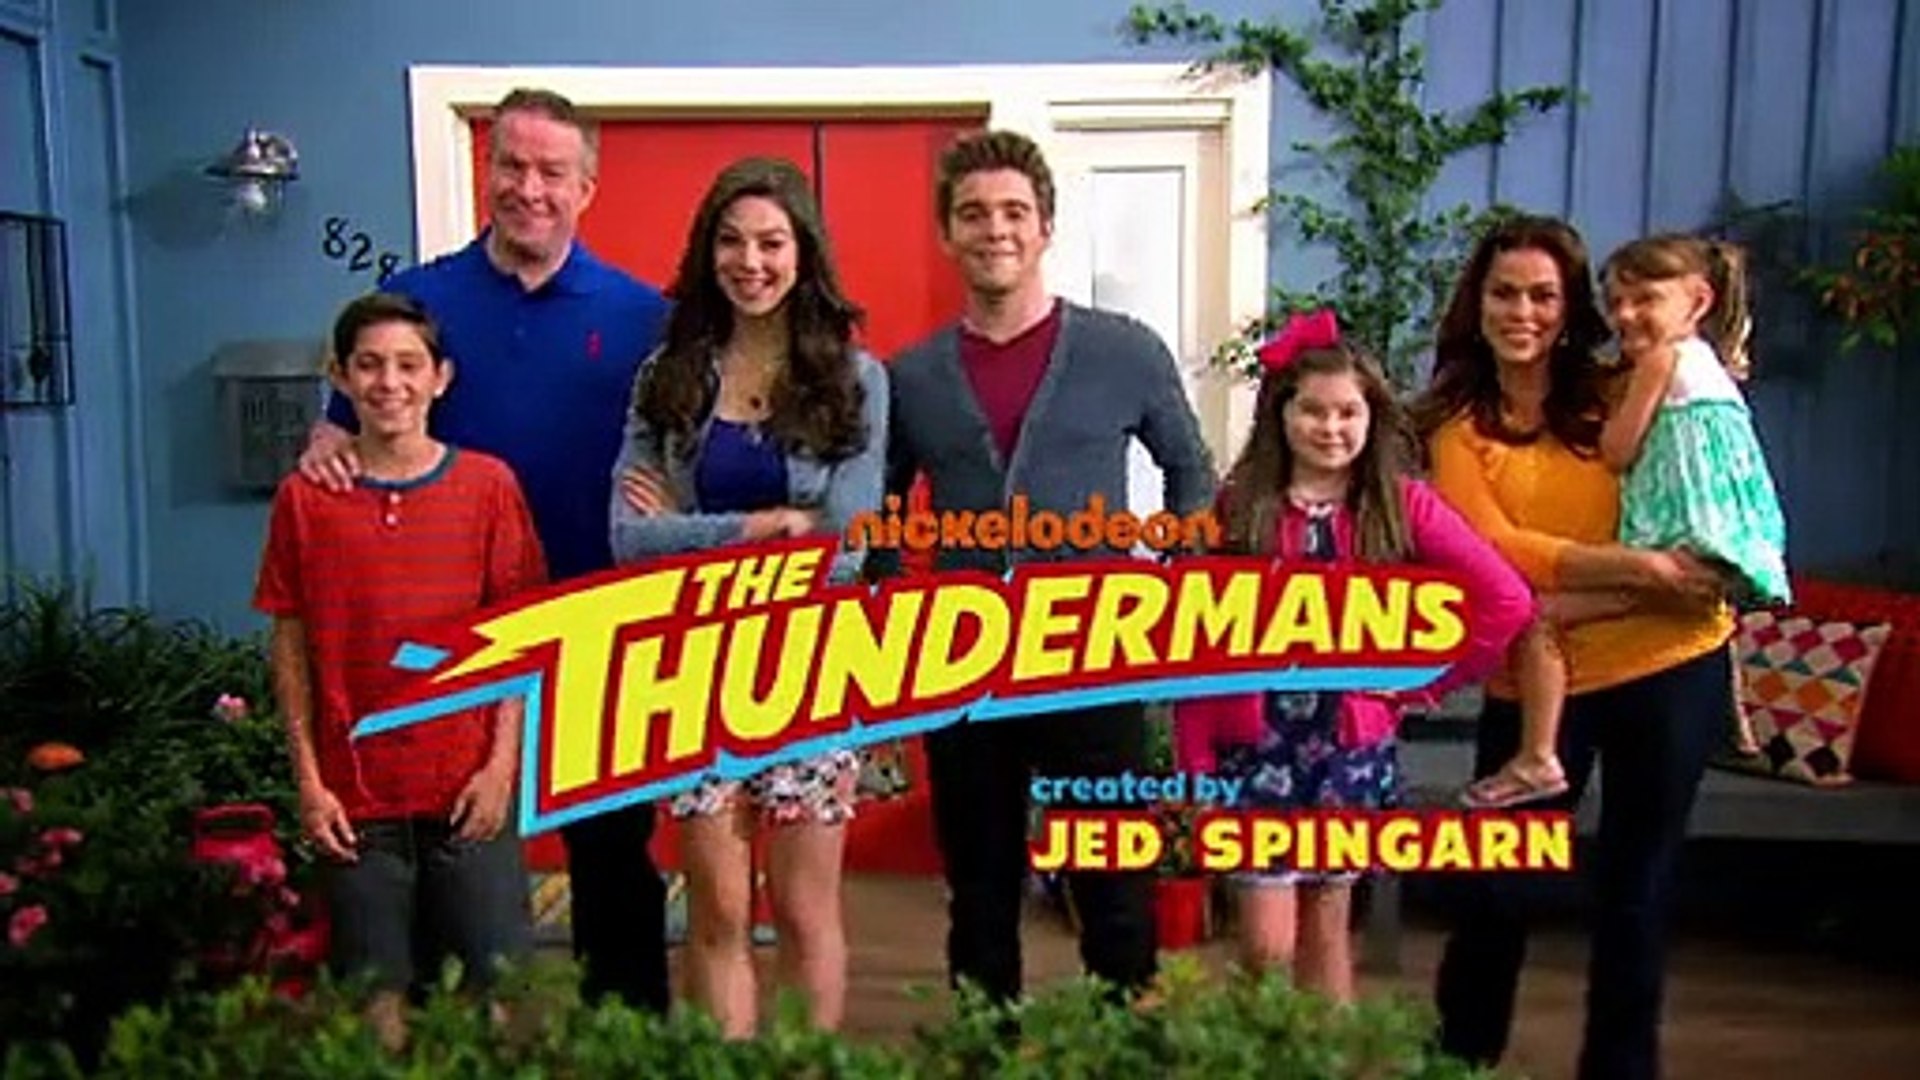 Watch The Thundermans Season 3